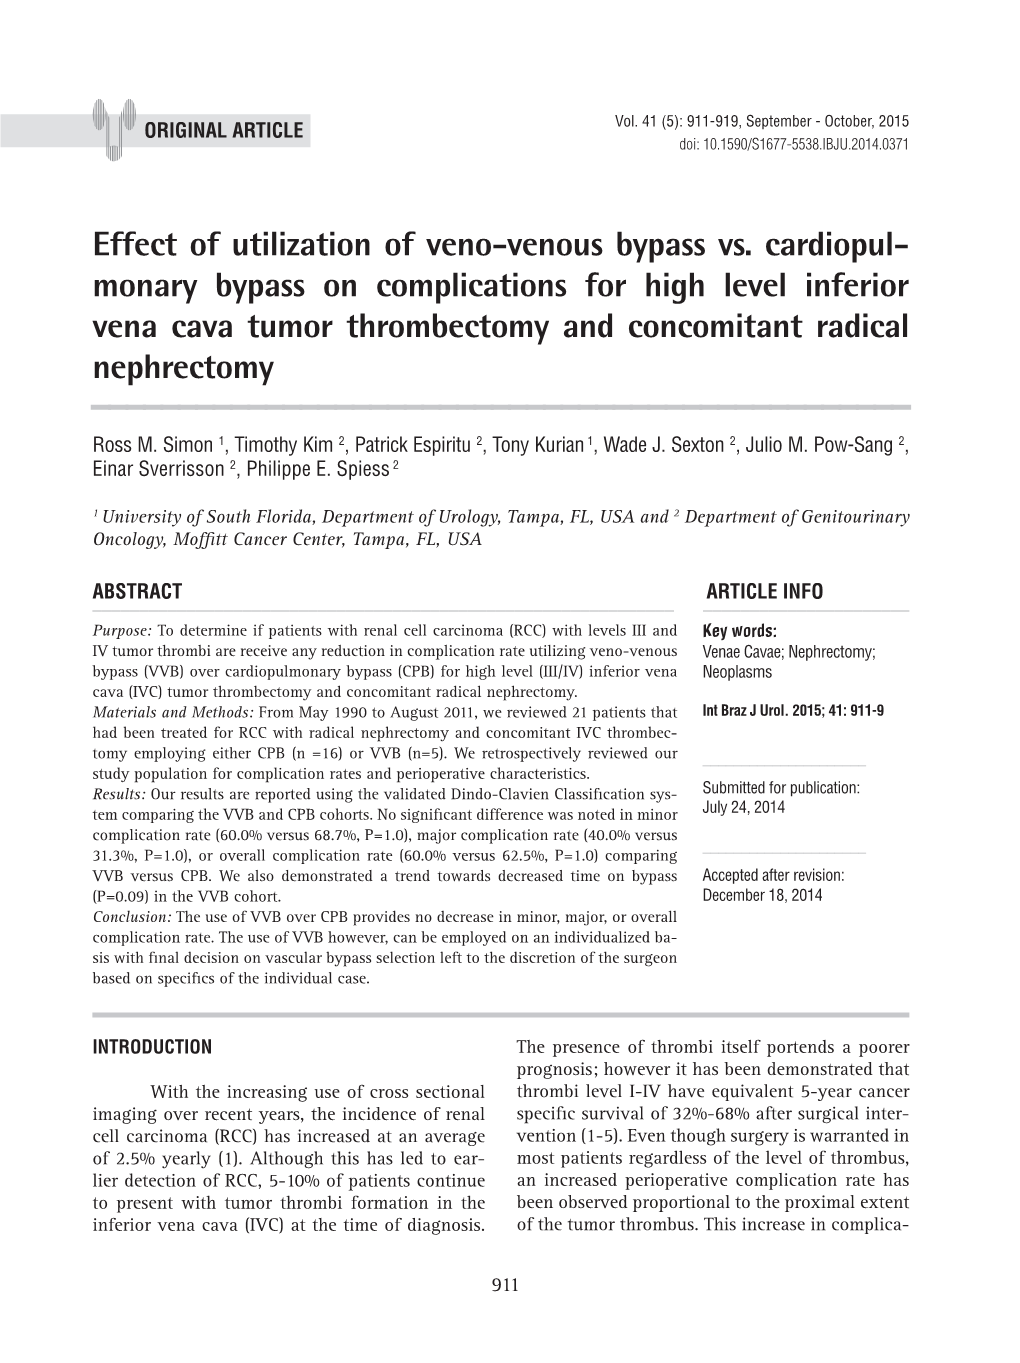 Effect of Utilization of Veno-Venous Bypass Vs. Cardiopul